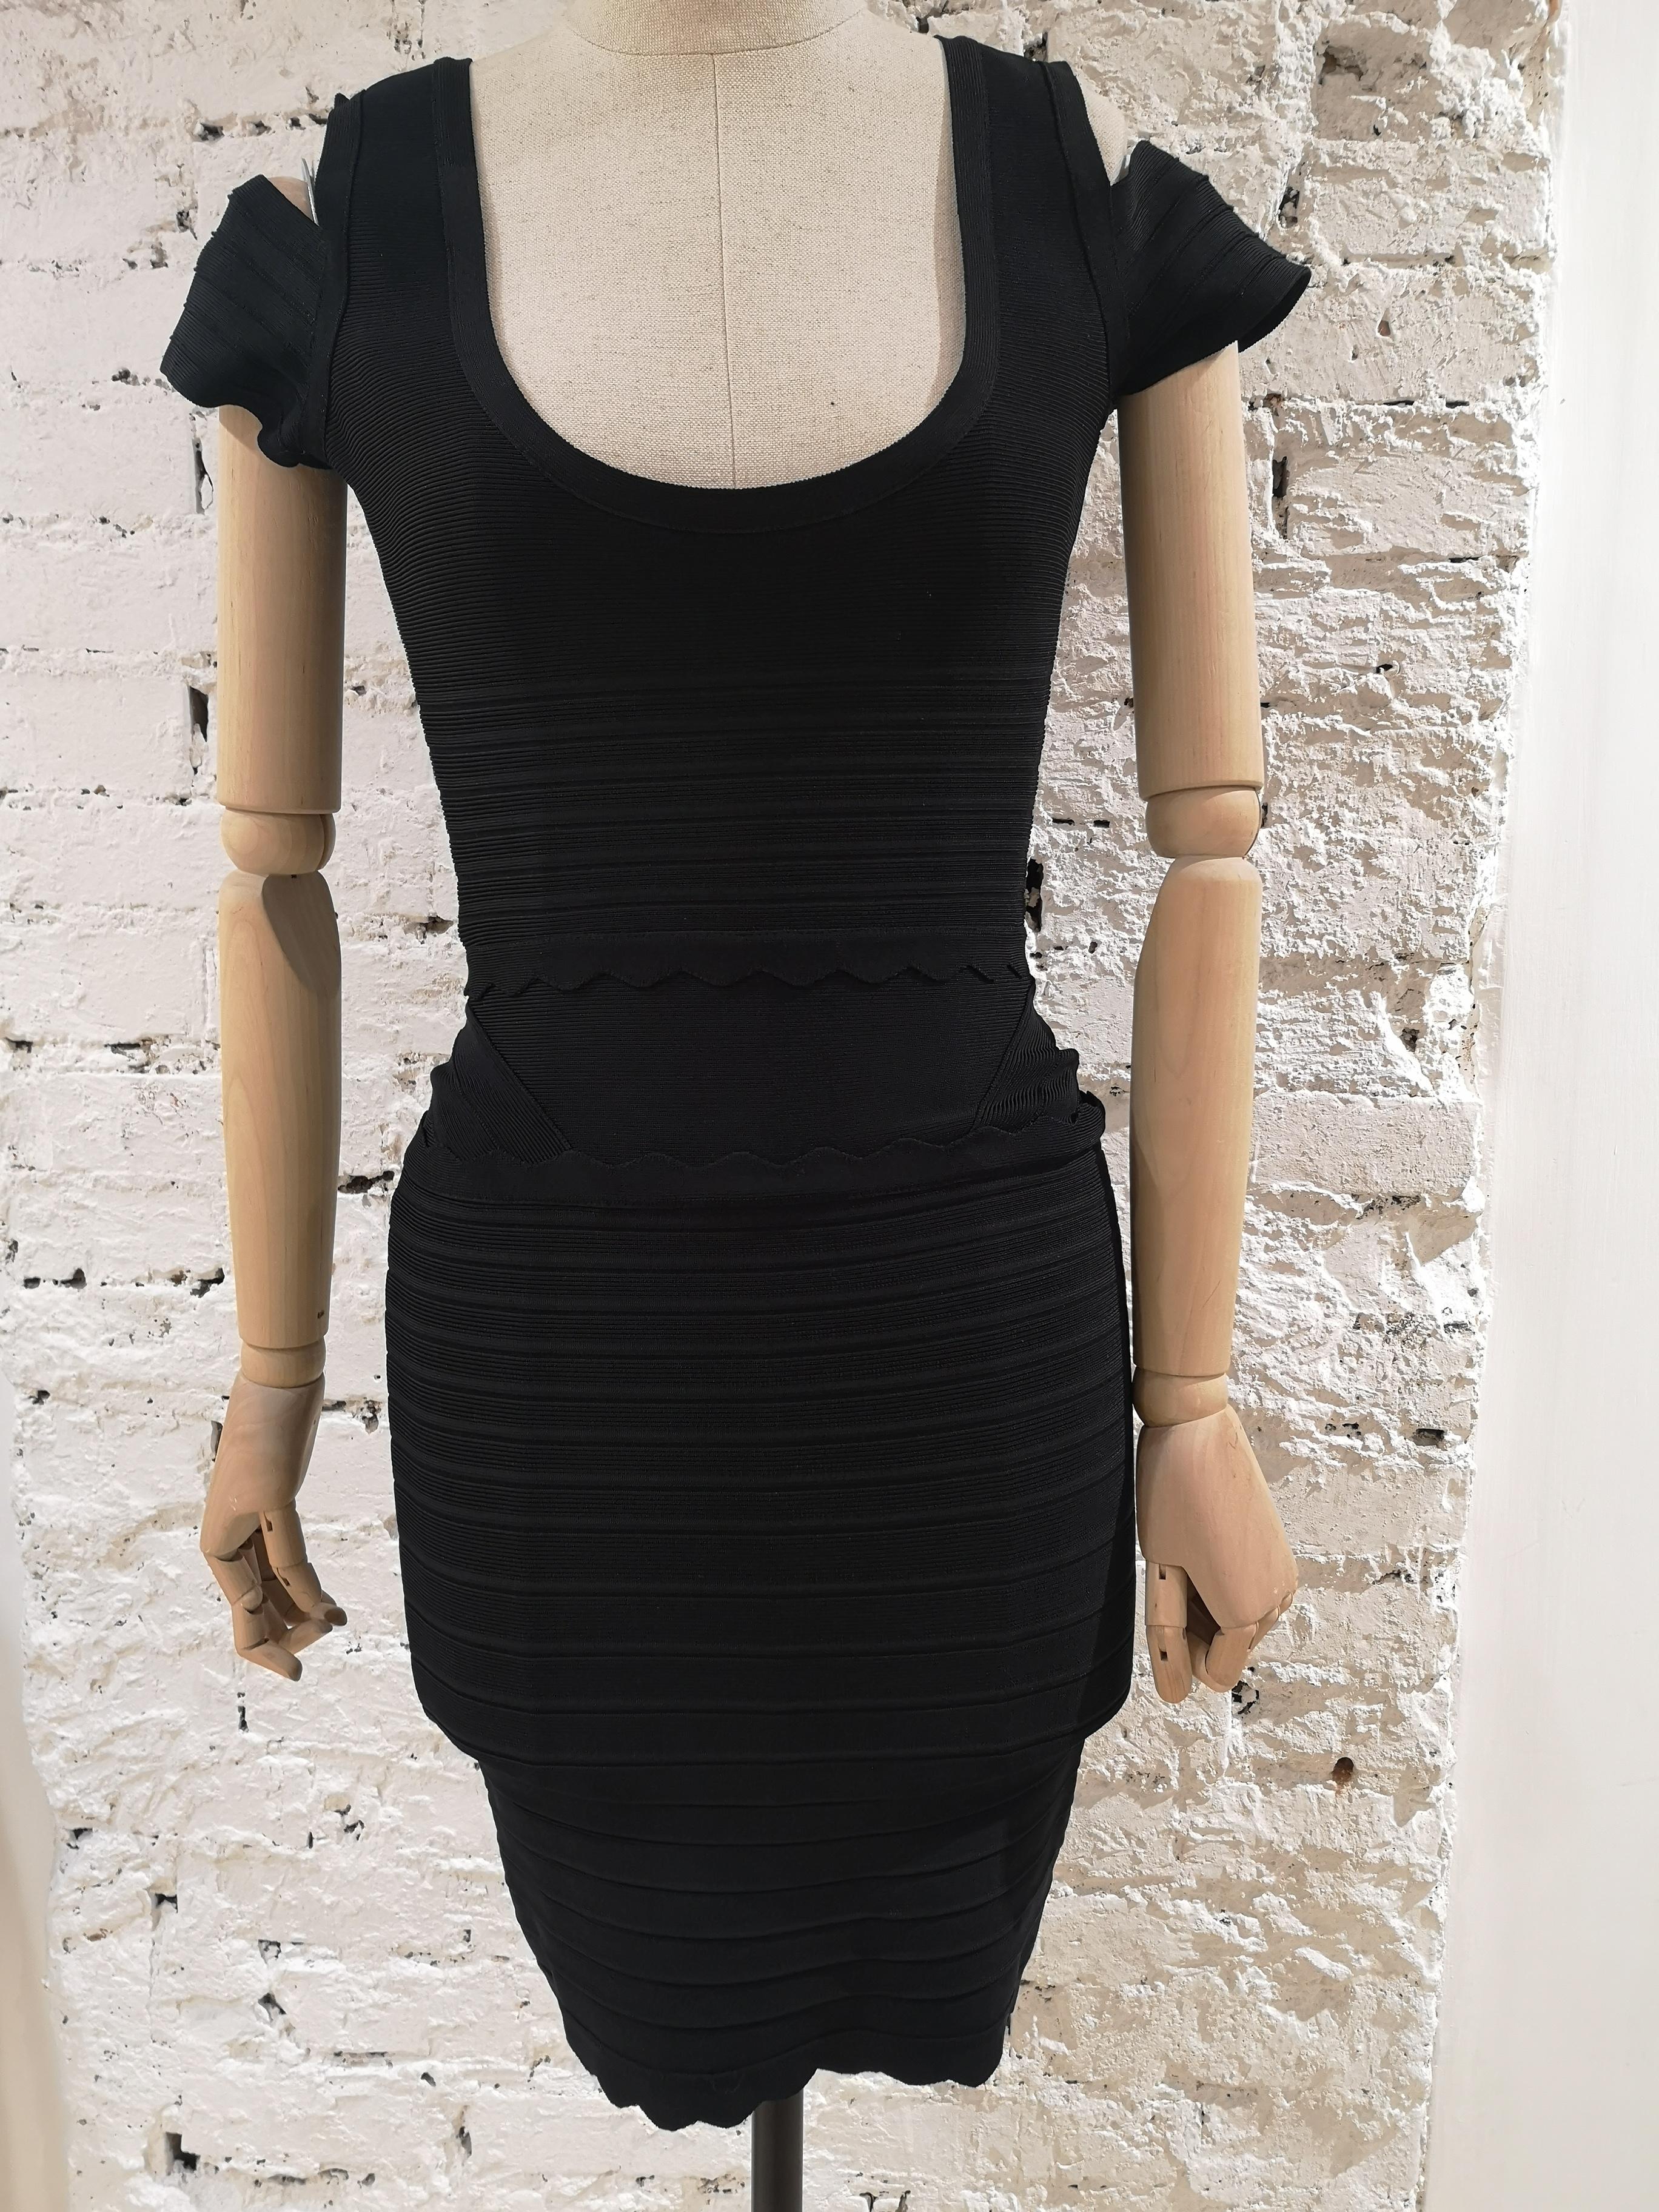 Hervé Léger Black Dress For Sale 6